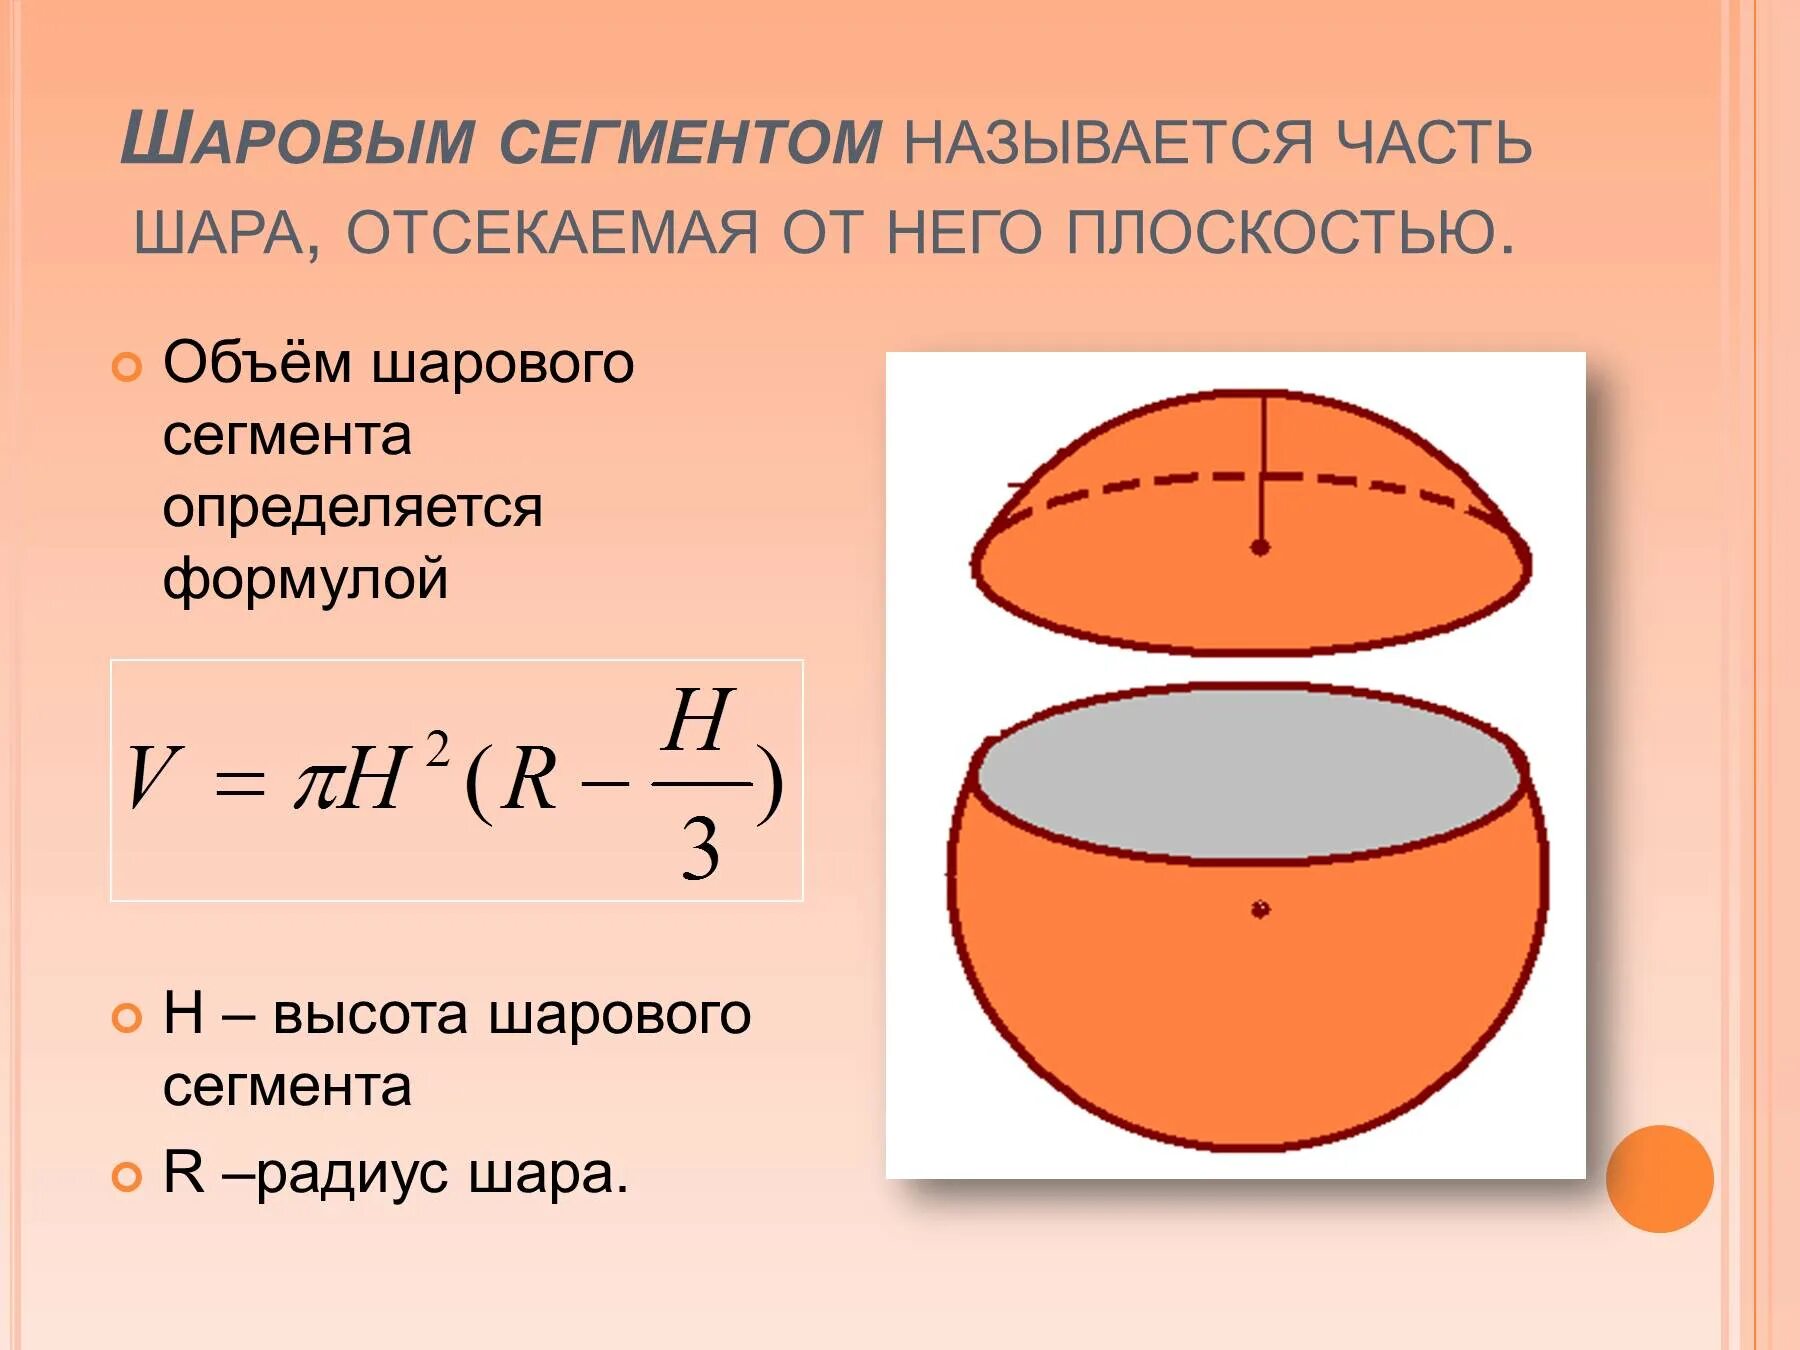 Половина радиуса шара. Формула объема части шара. Объём сегмента шара формула. Объем шарового сегмента формула. Объем шара и его частей формулы.